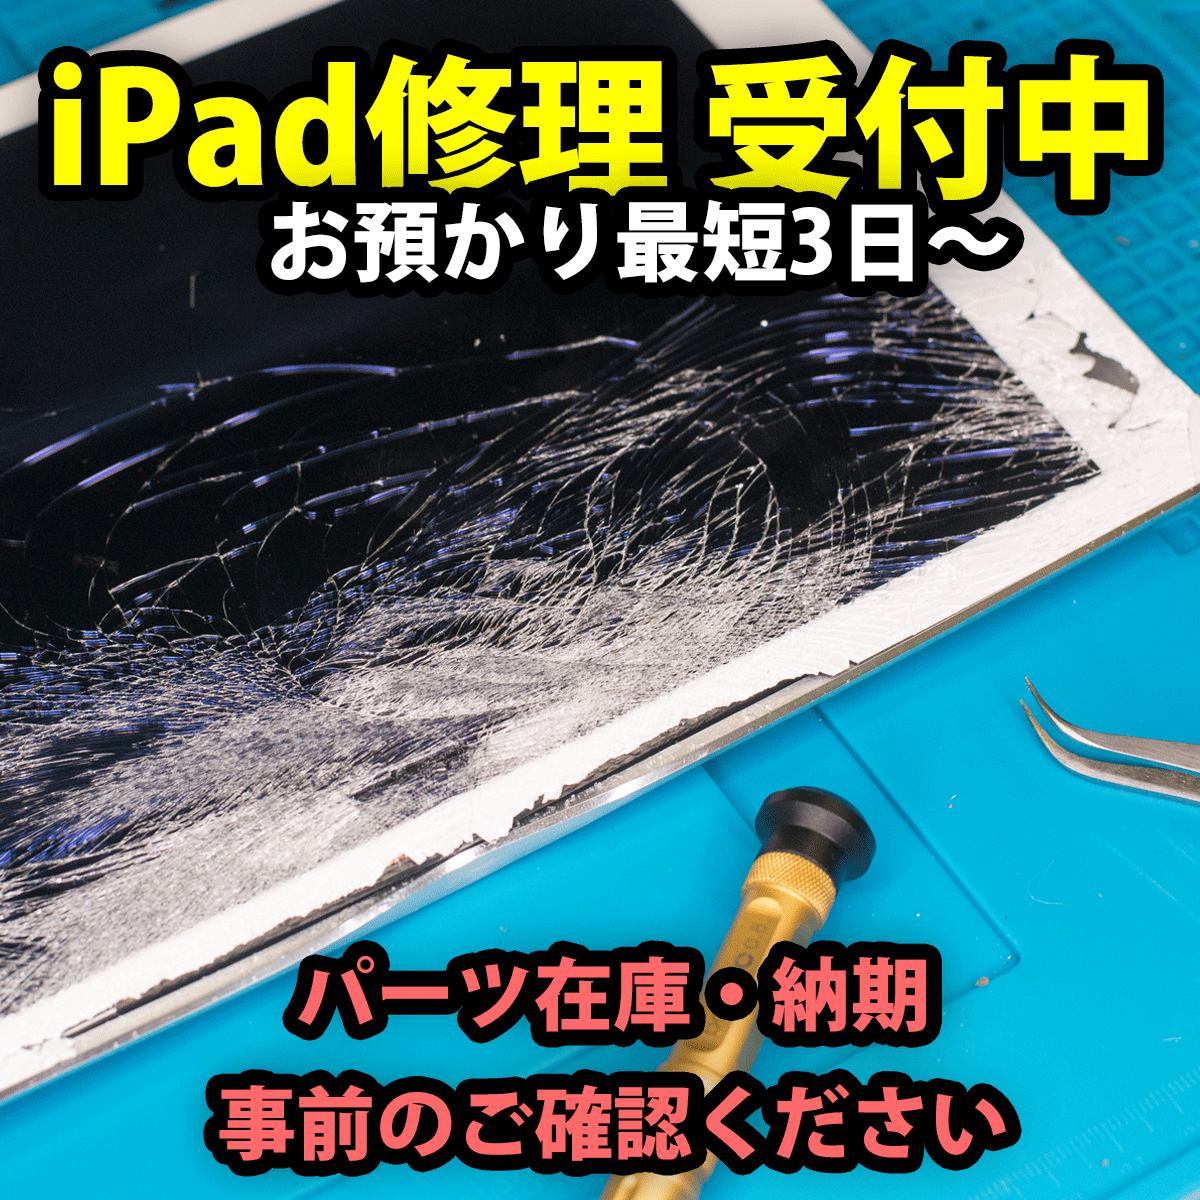 iPad修理s